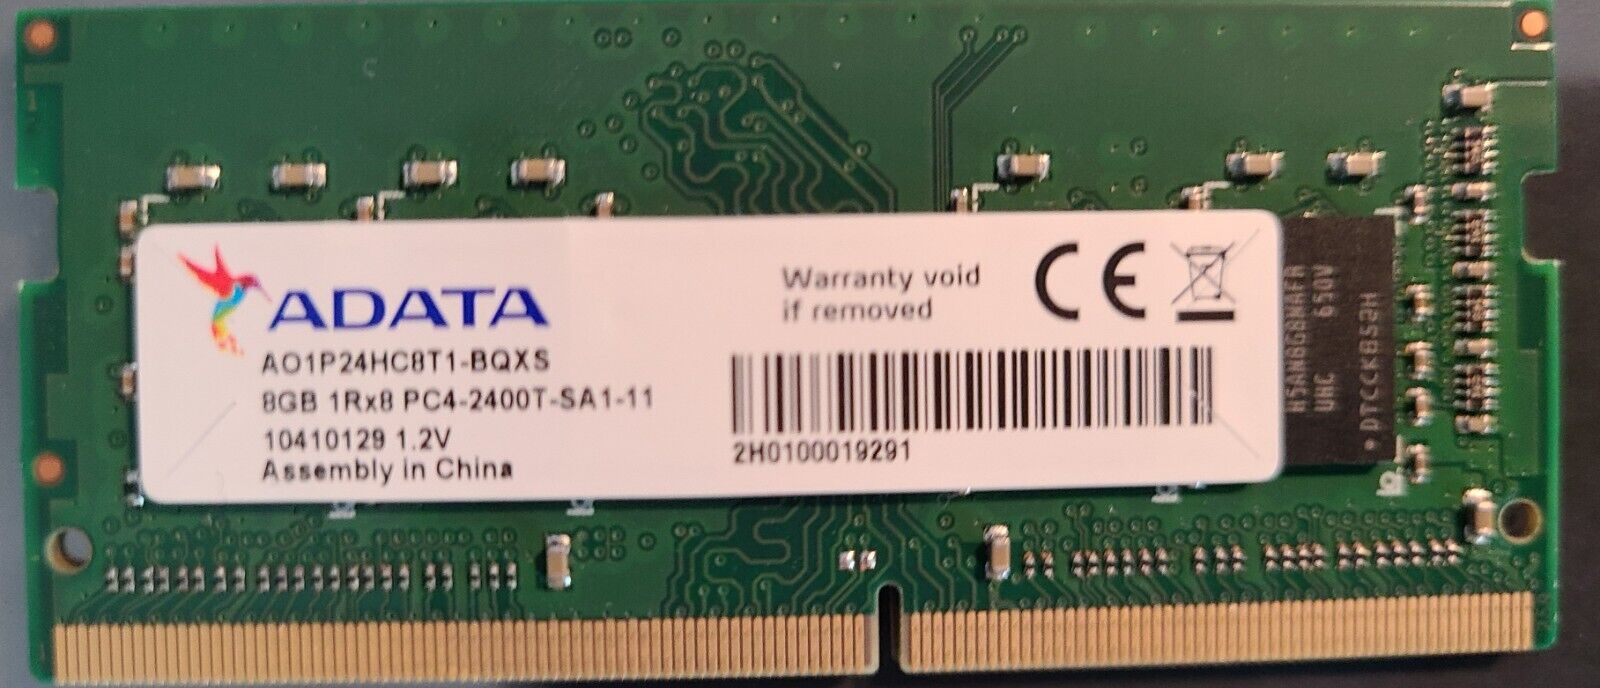  ADATA AO1P24HC8T1-BQXS 8GB DDR4 260pin SODIMM 2400MHz - Used, Test GOOD 